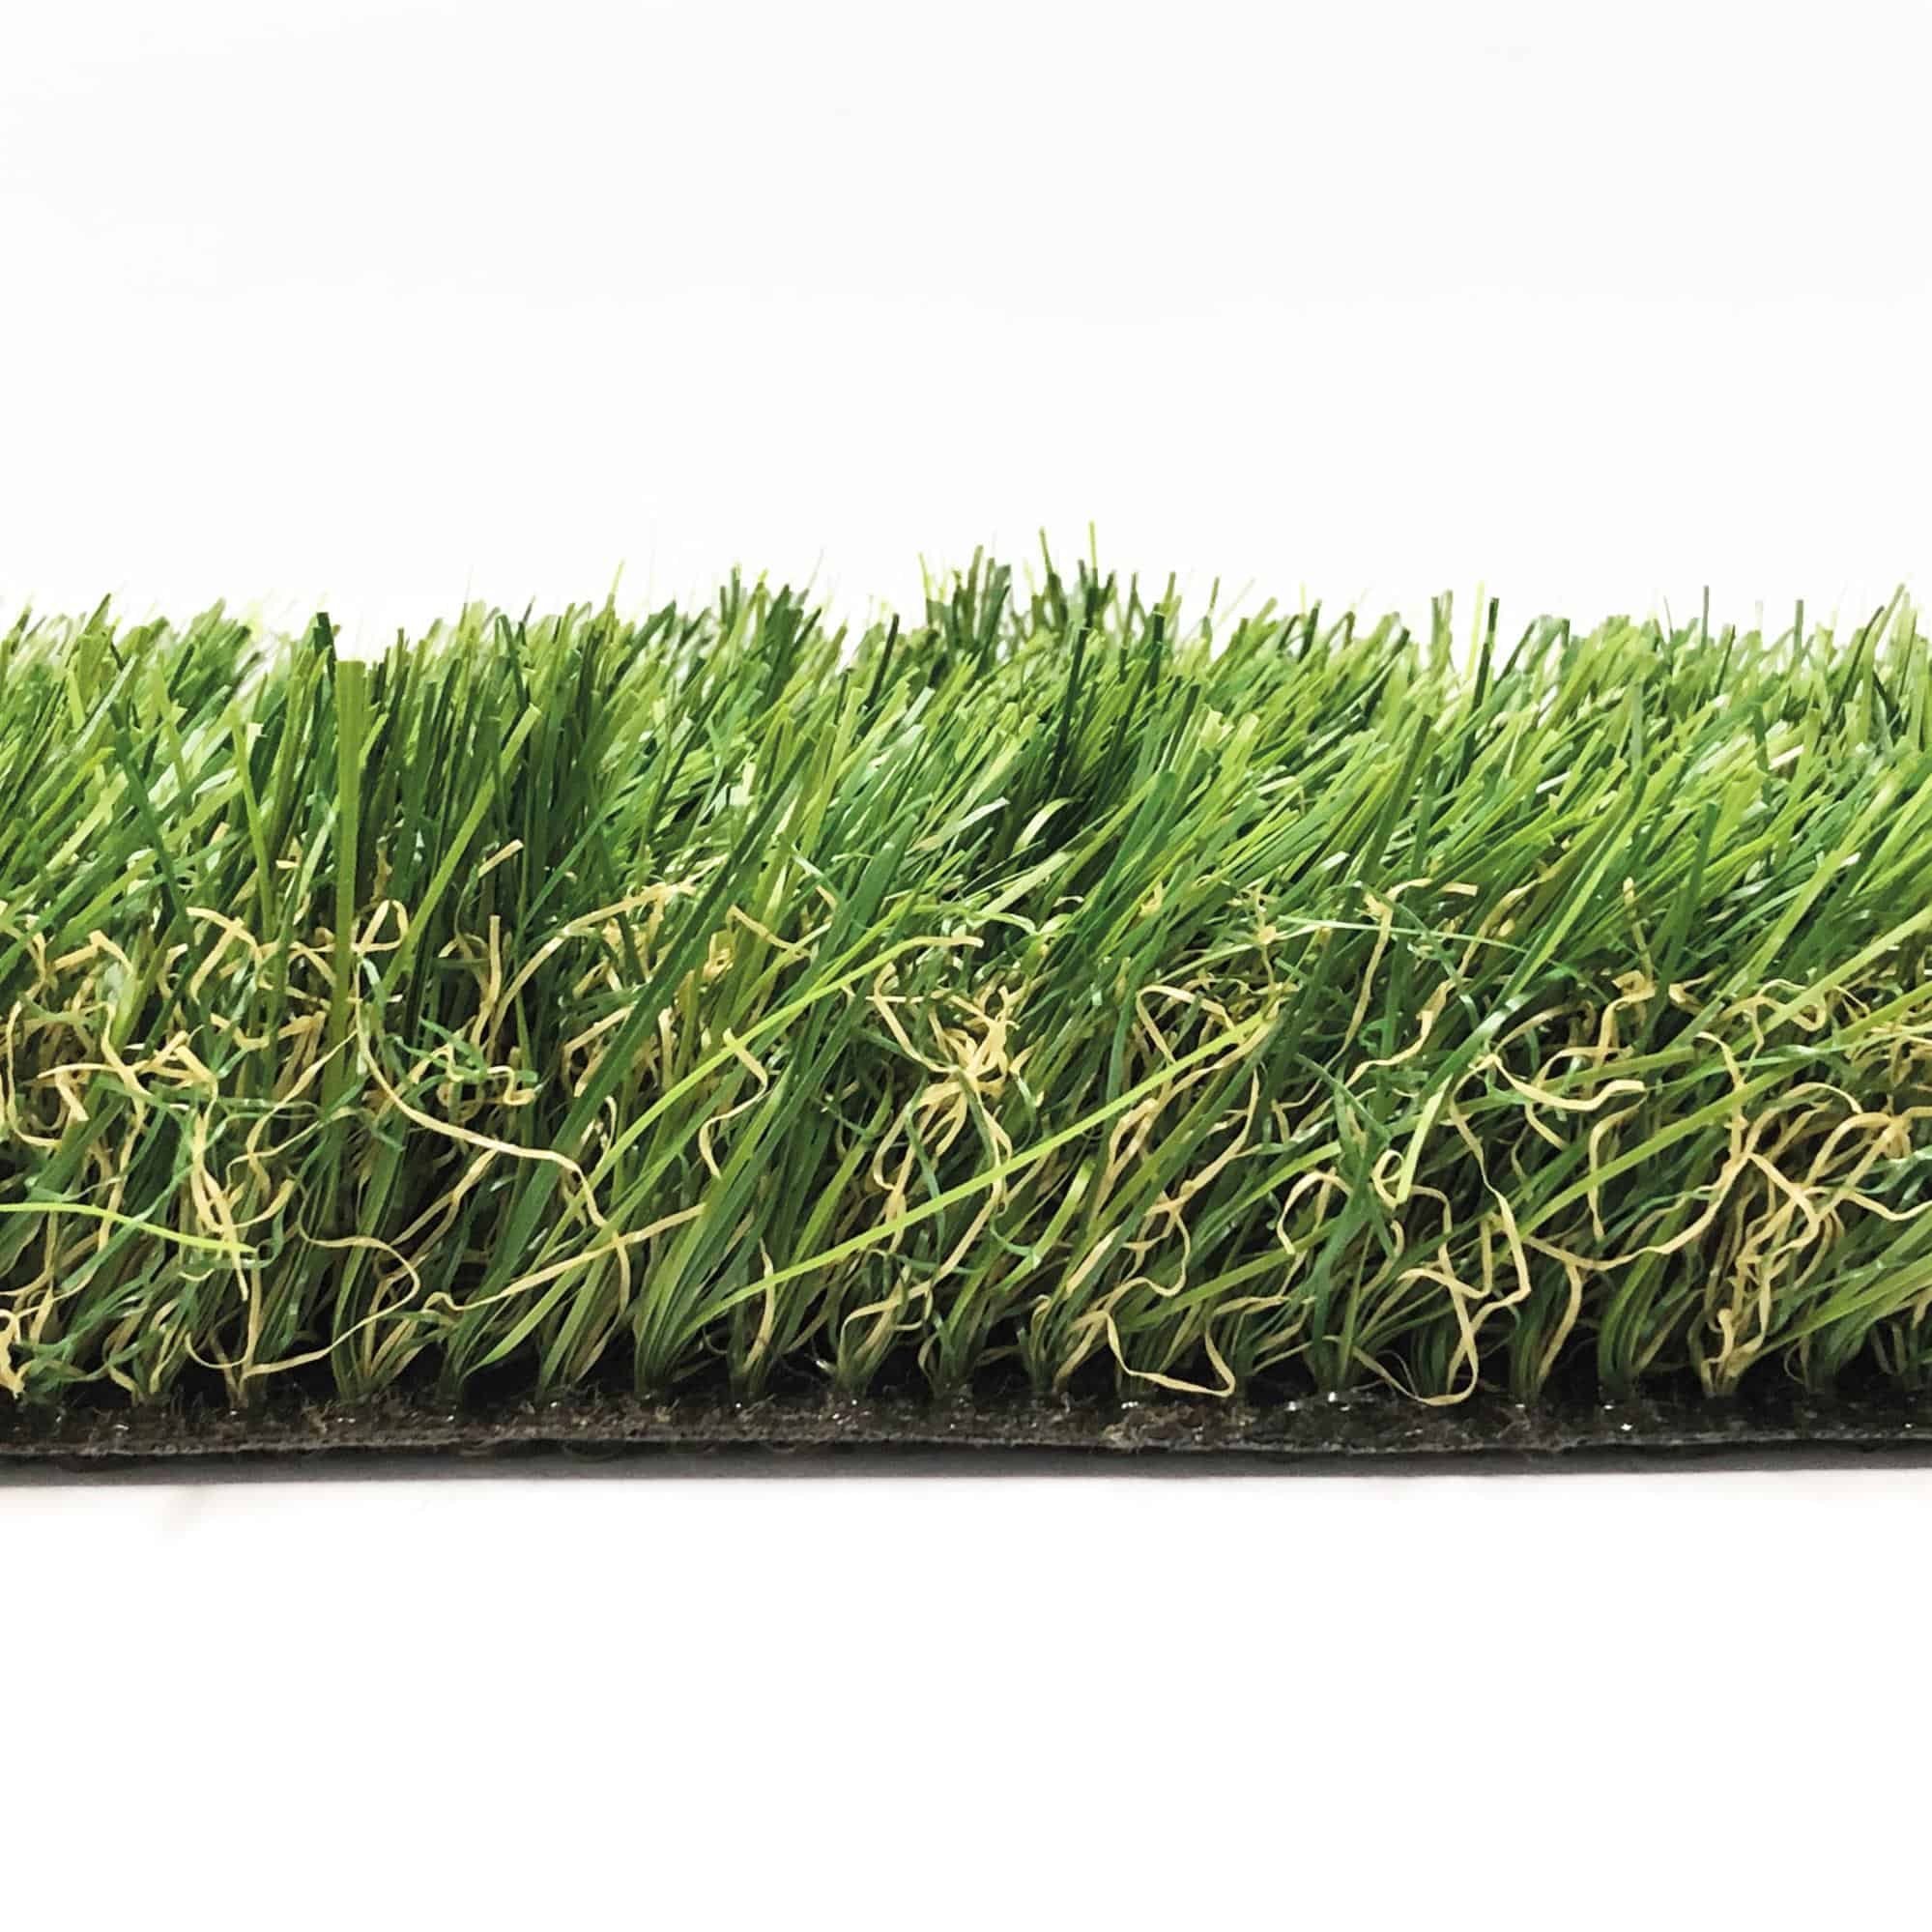 CORE Lawn Natural Artificial Grass 4m Wide Roll 20 m